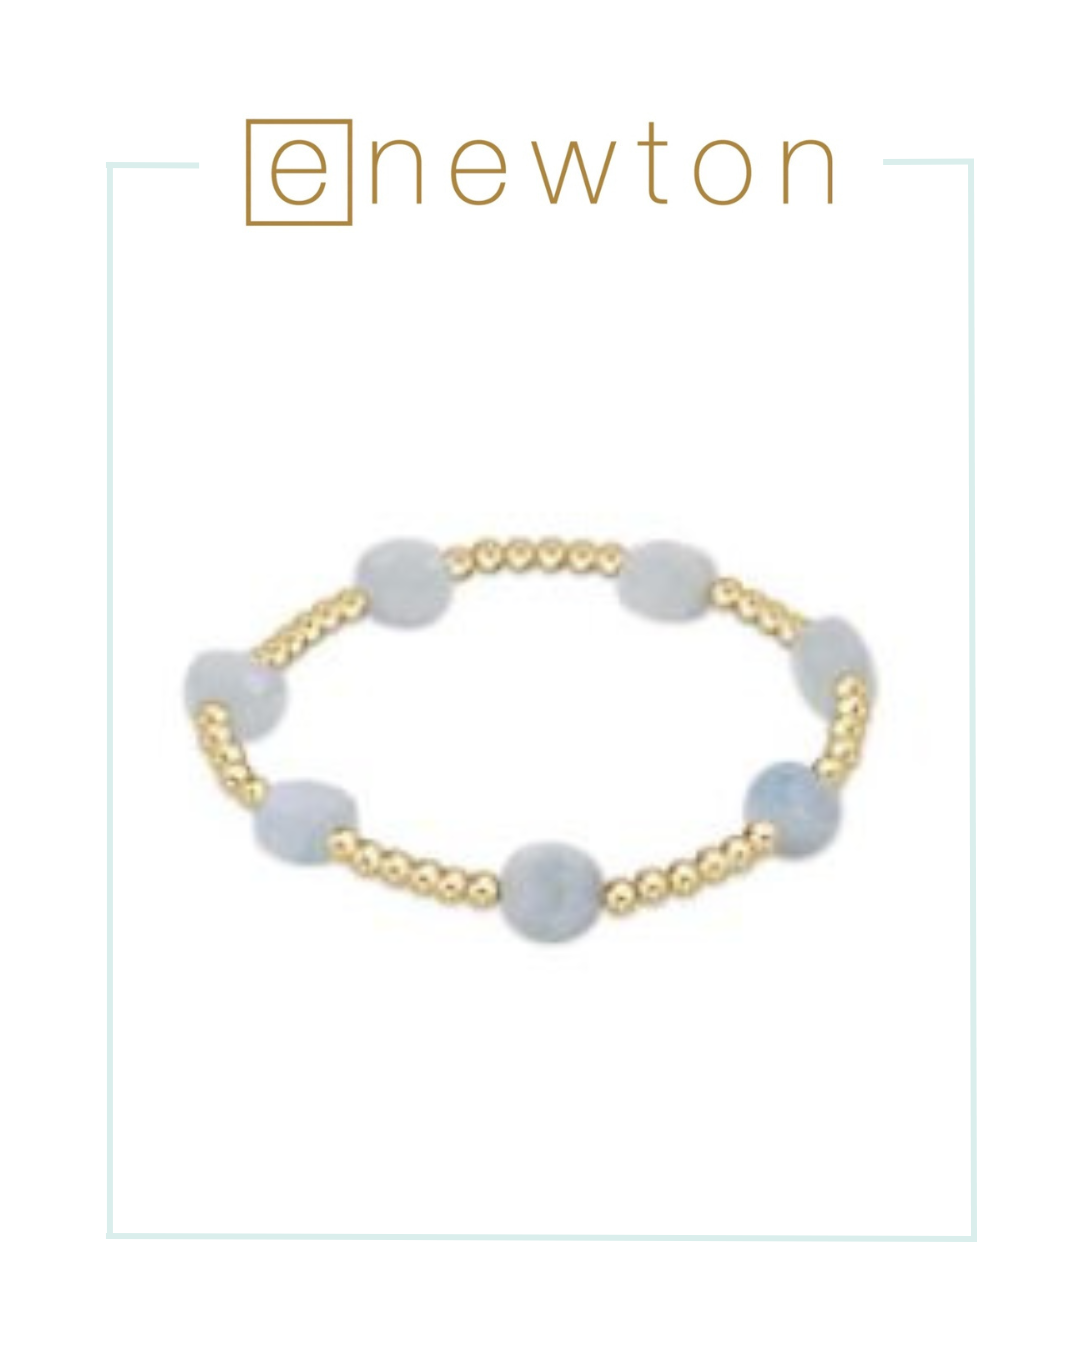 E Newton Admire Gold 3mm Bead Bracelet - Aquamarine-Bracelets-ENEWTON-The Village Shoppe, Women’s Fashion Boutique, Shop Online and In Store - Located in Muscle Shoals, AL.